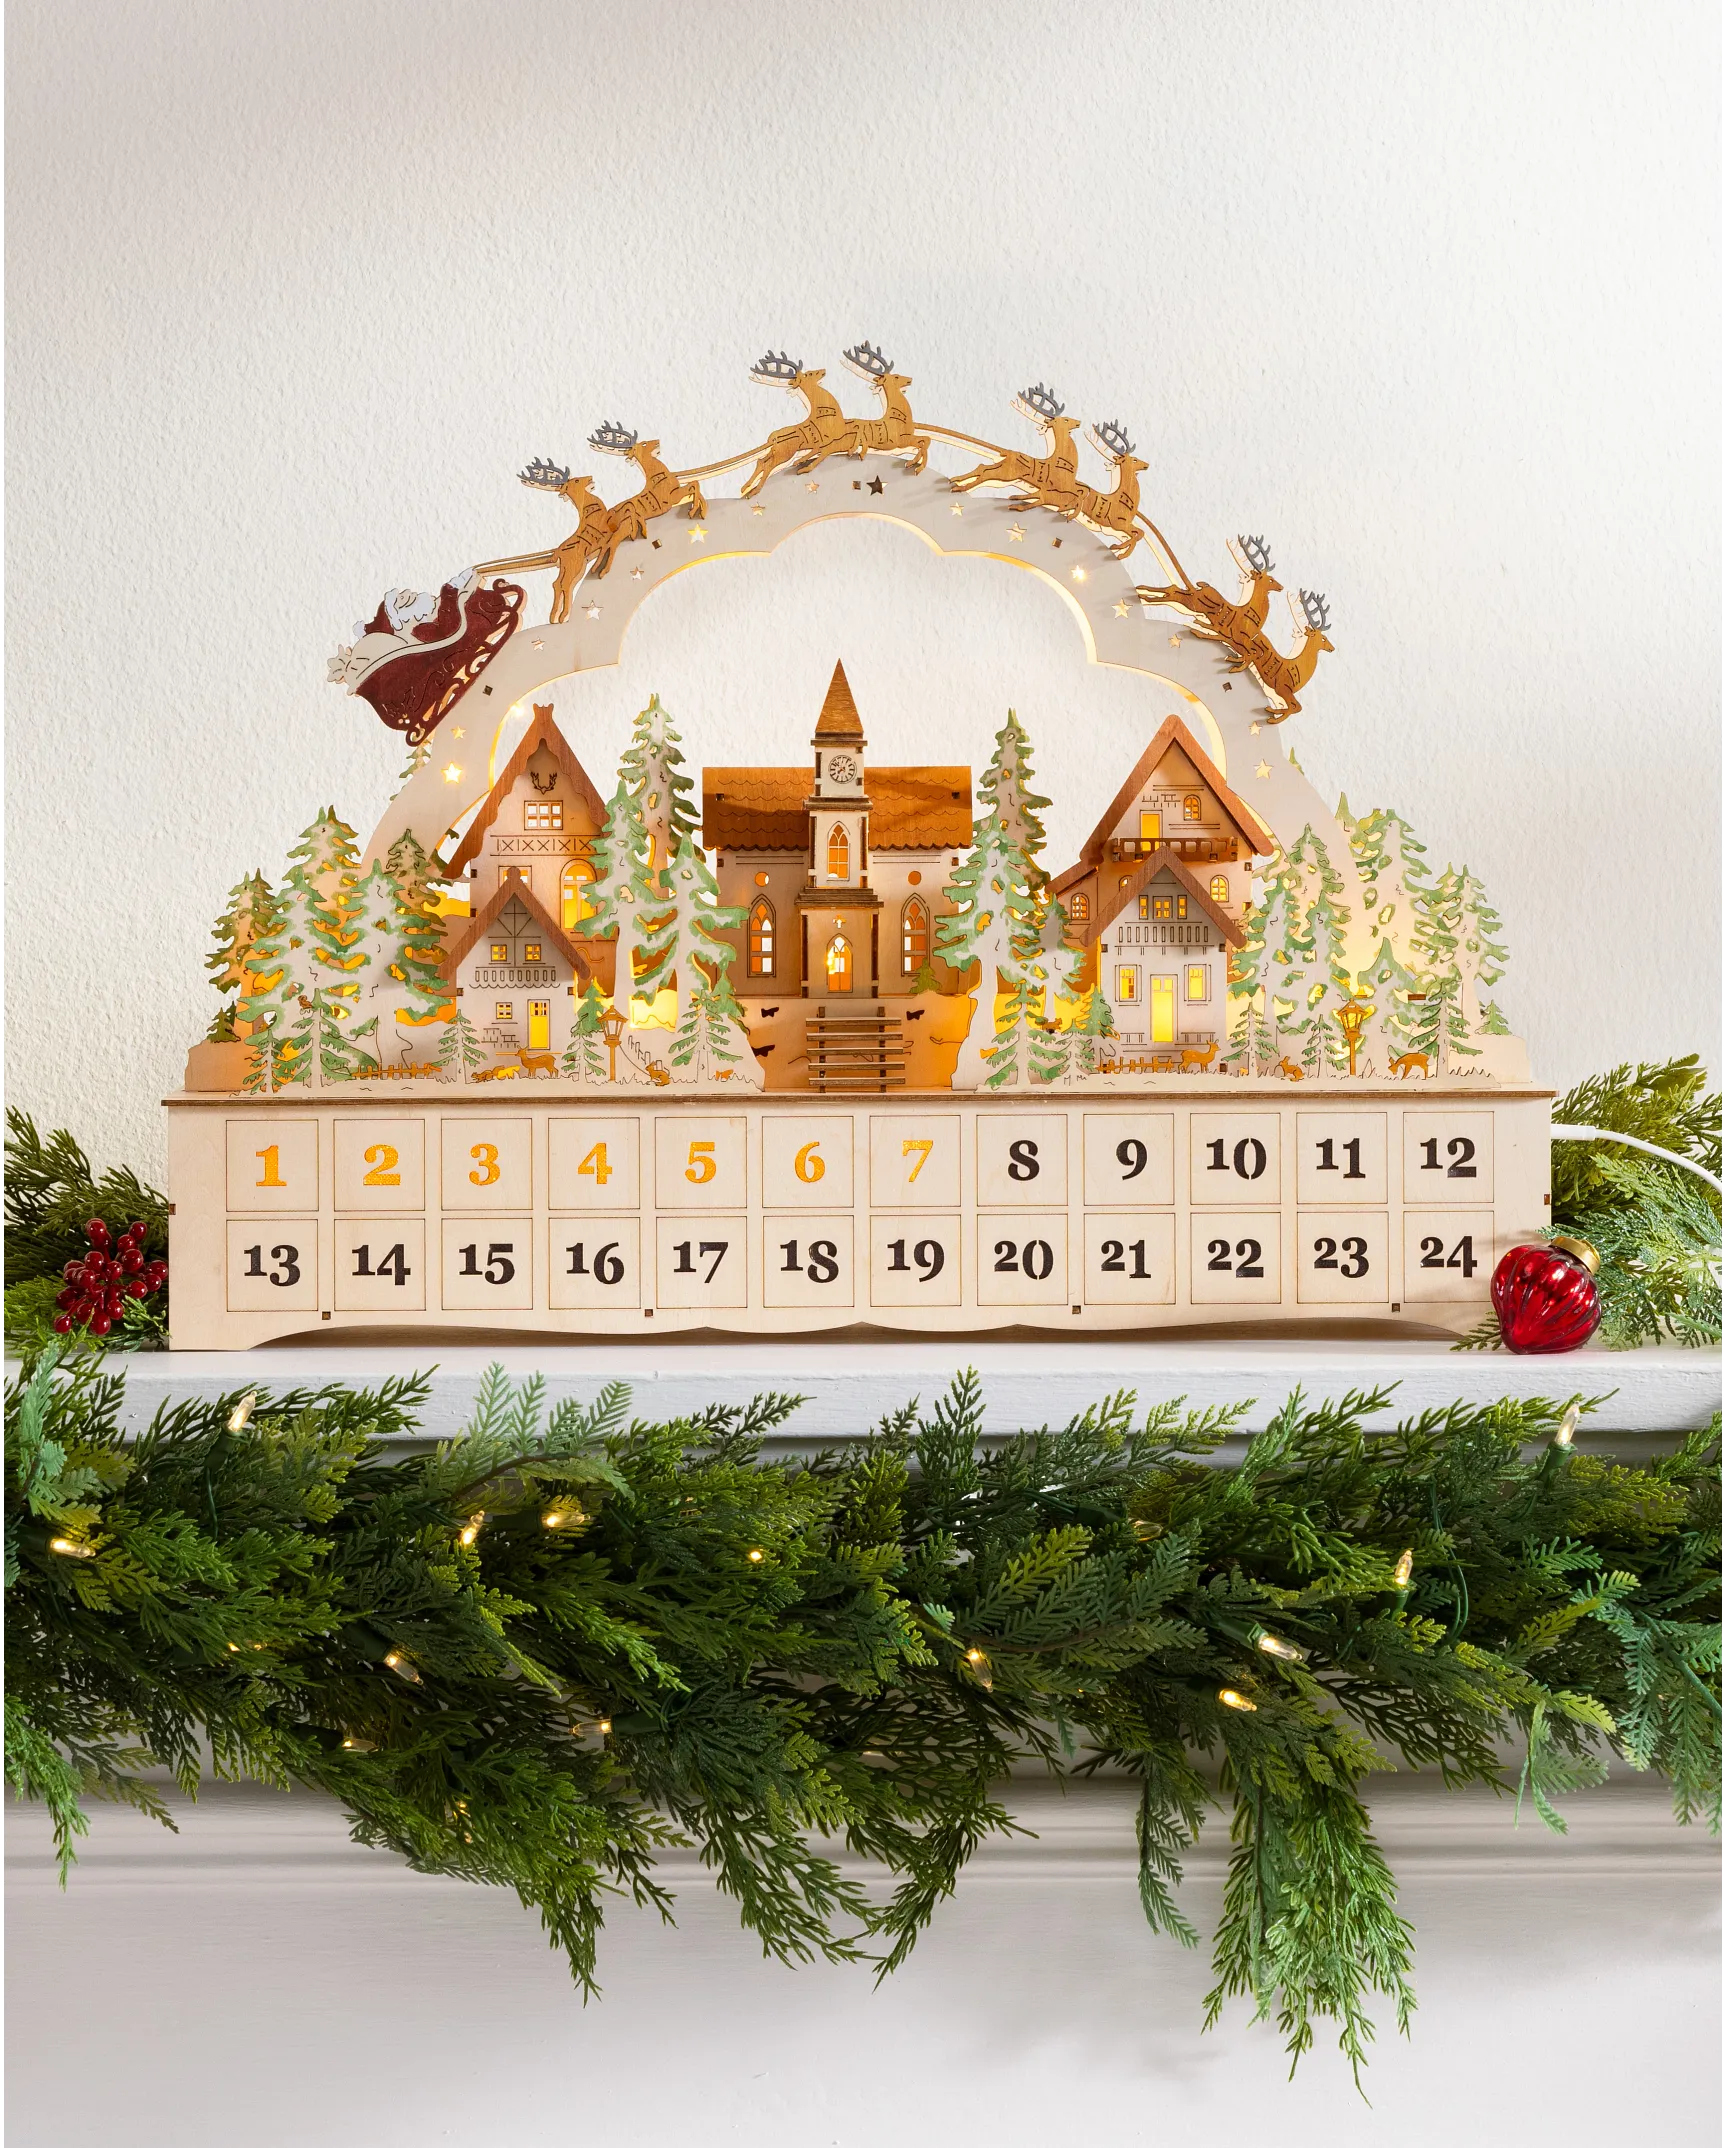 Lit Wooden Santa Express Advent Calendar Decor